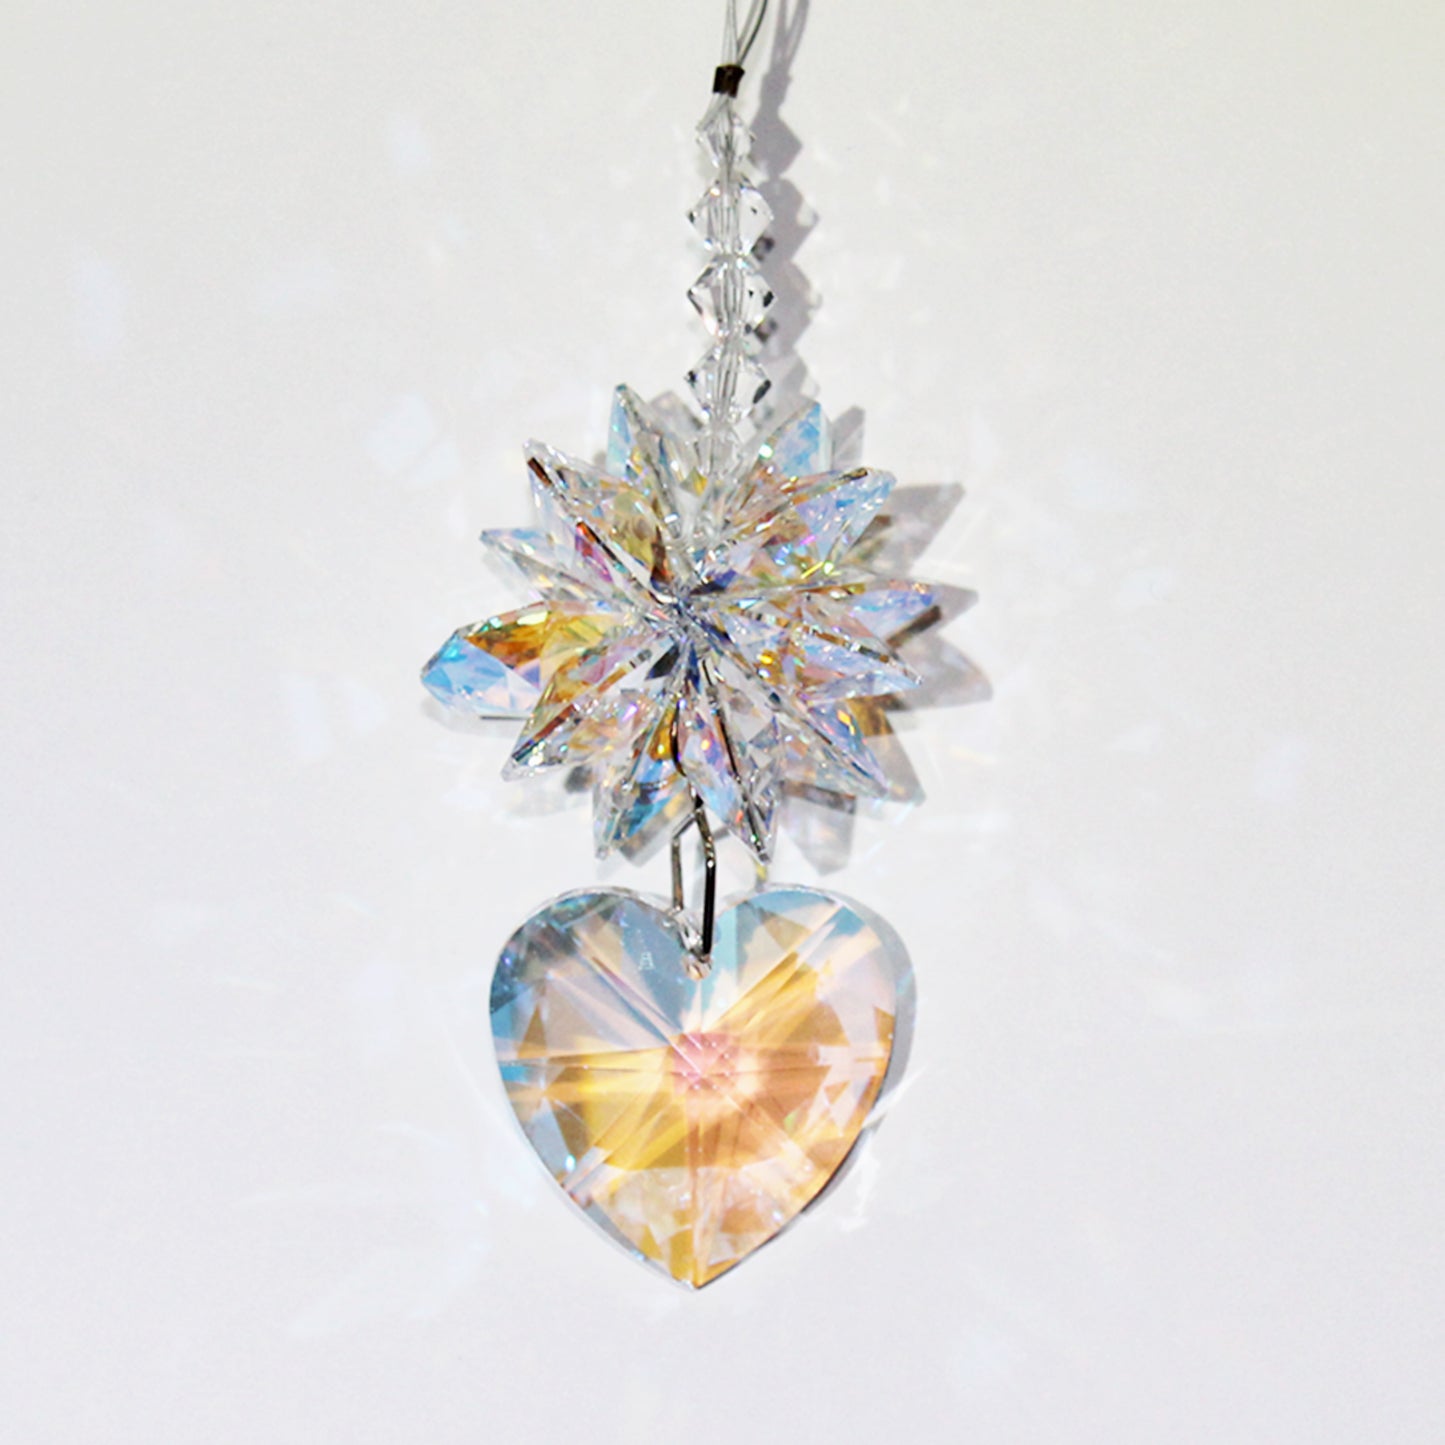 Crystal Heart Pendulum Ornament Suncatcher, Rainbow Maker, Sunlight Catcher, Hanging Crystals, Aurora Borealis